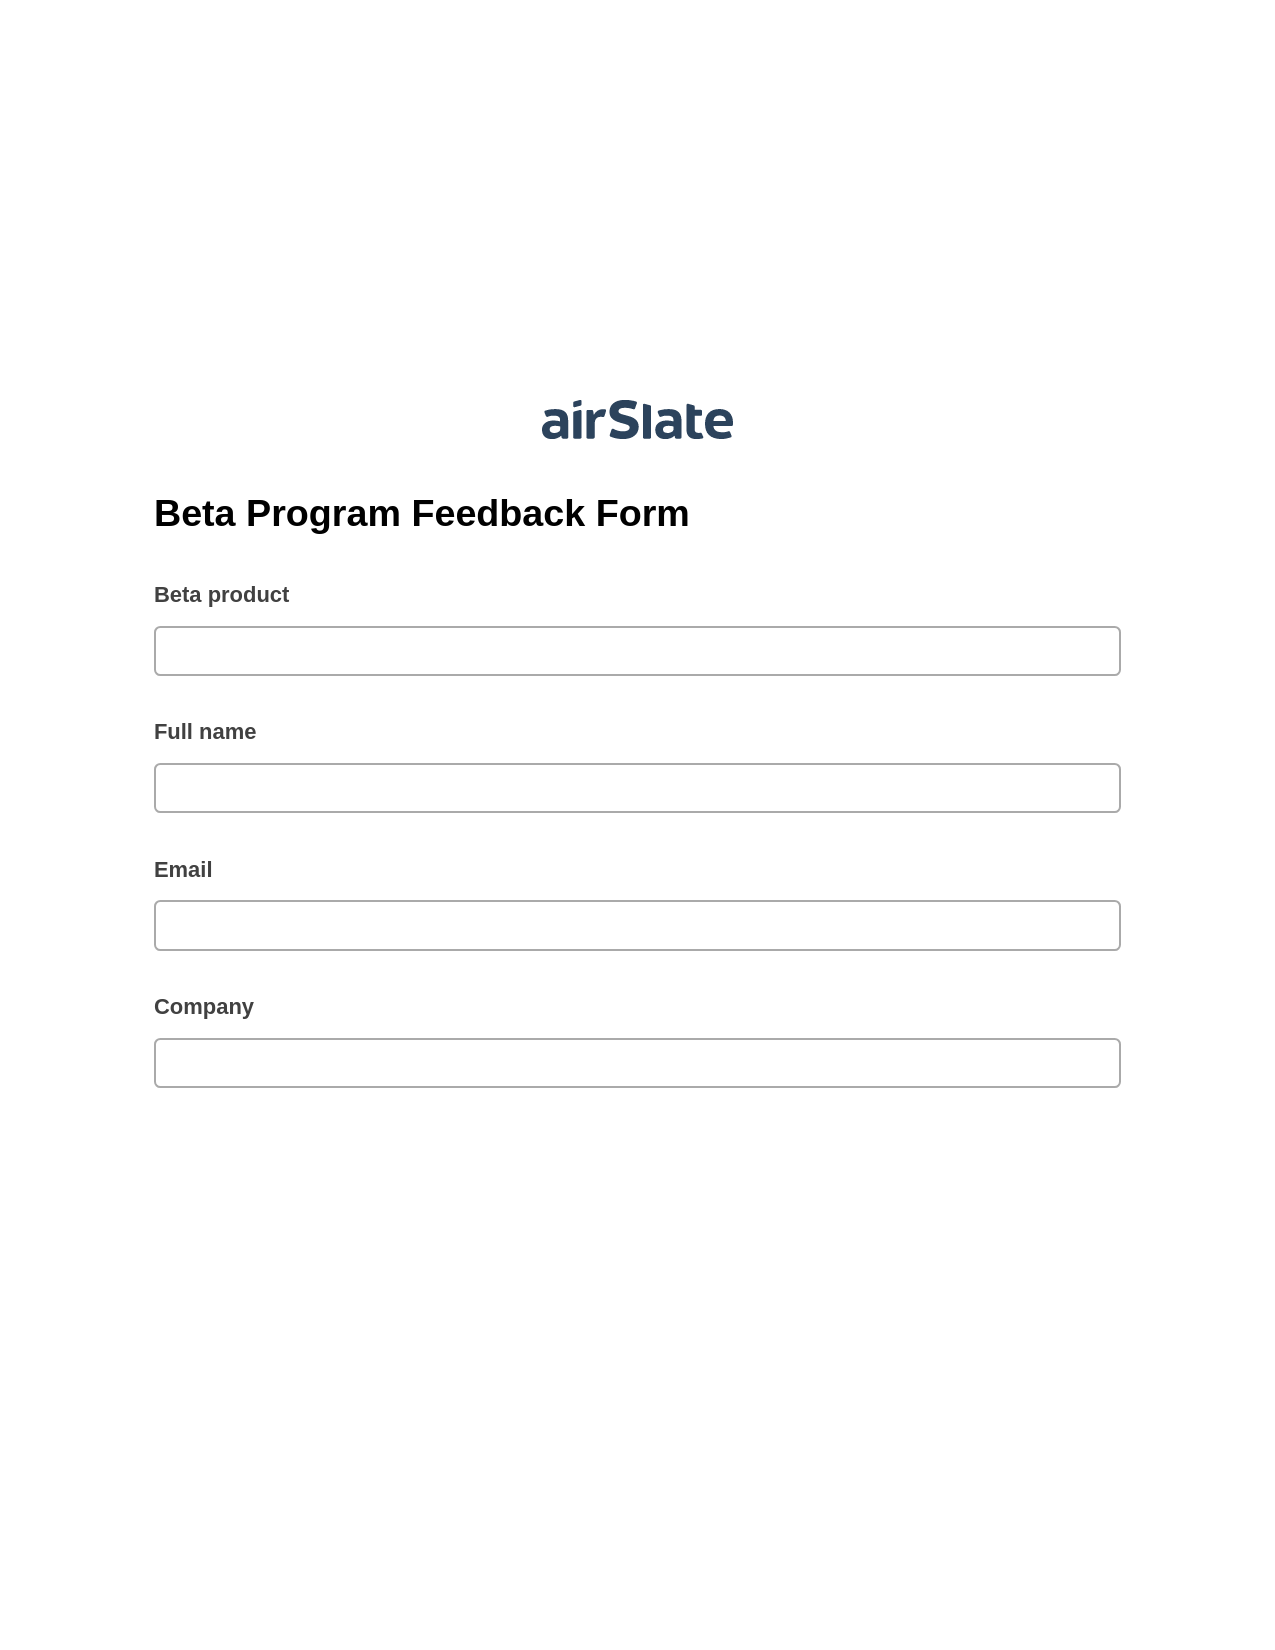 Beta Program Feedback Form Pre-fill from CSV File Bot, Webhook Bot, Email Notification Postfinish Bot